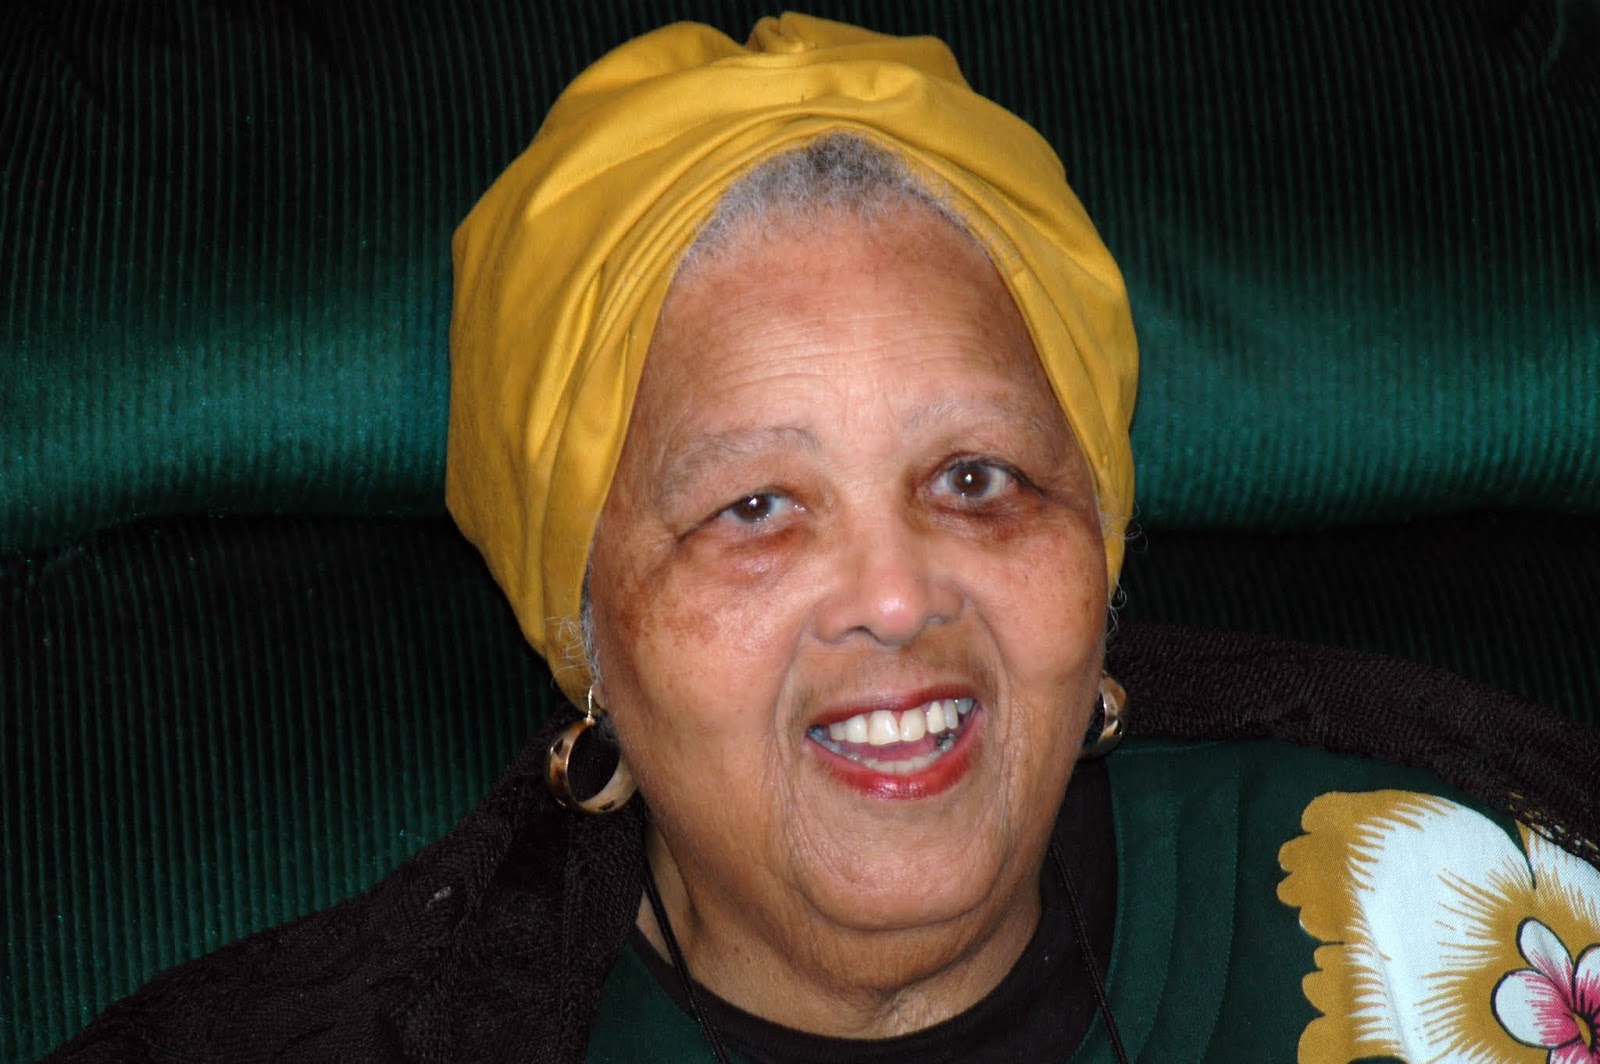 A Likkle Miss Lou: How Jamaican Poet Louise Bennett Coverley Found